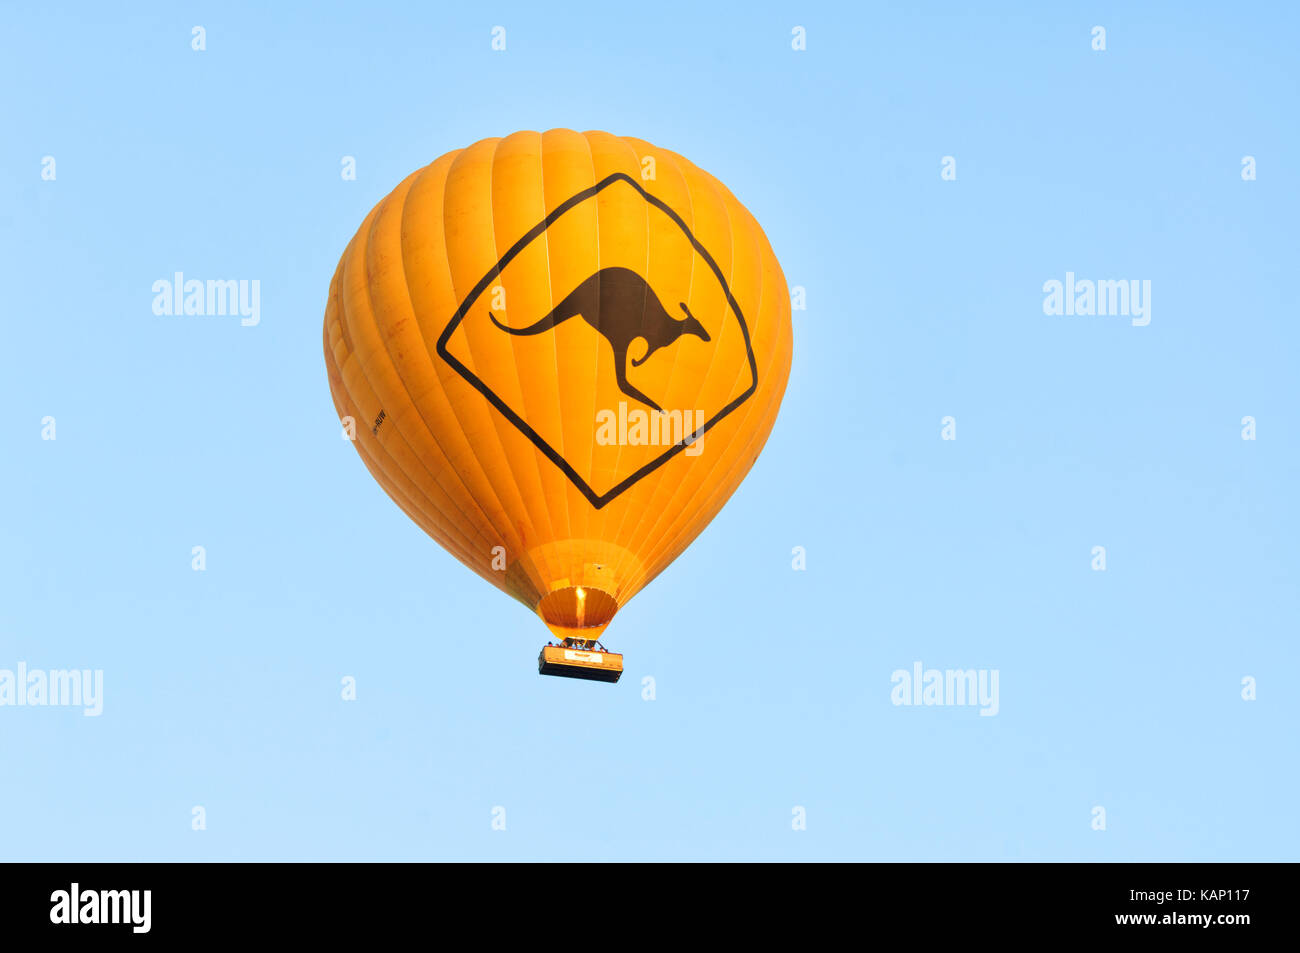 Yellow Hot Air Balloon with a kangaroo design flying in mid-air, Mareeba, Queensland, QLD, Australia Stock Photo